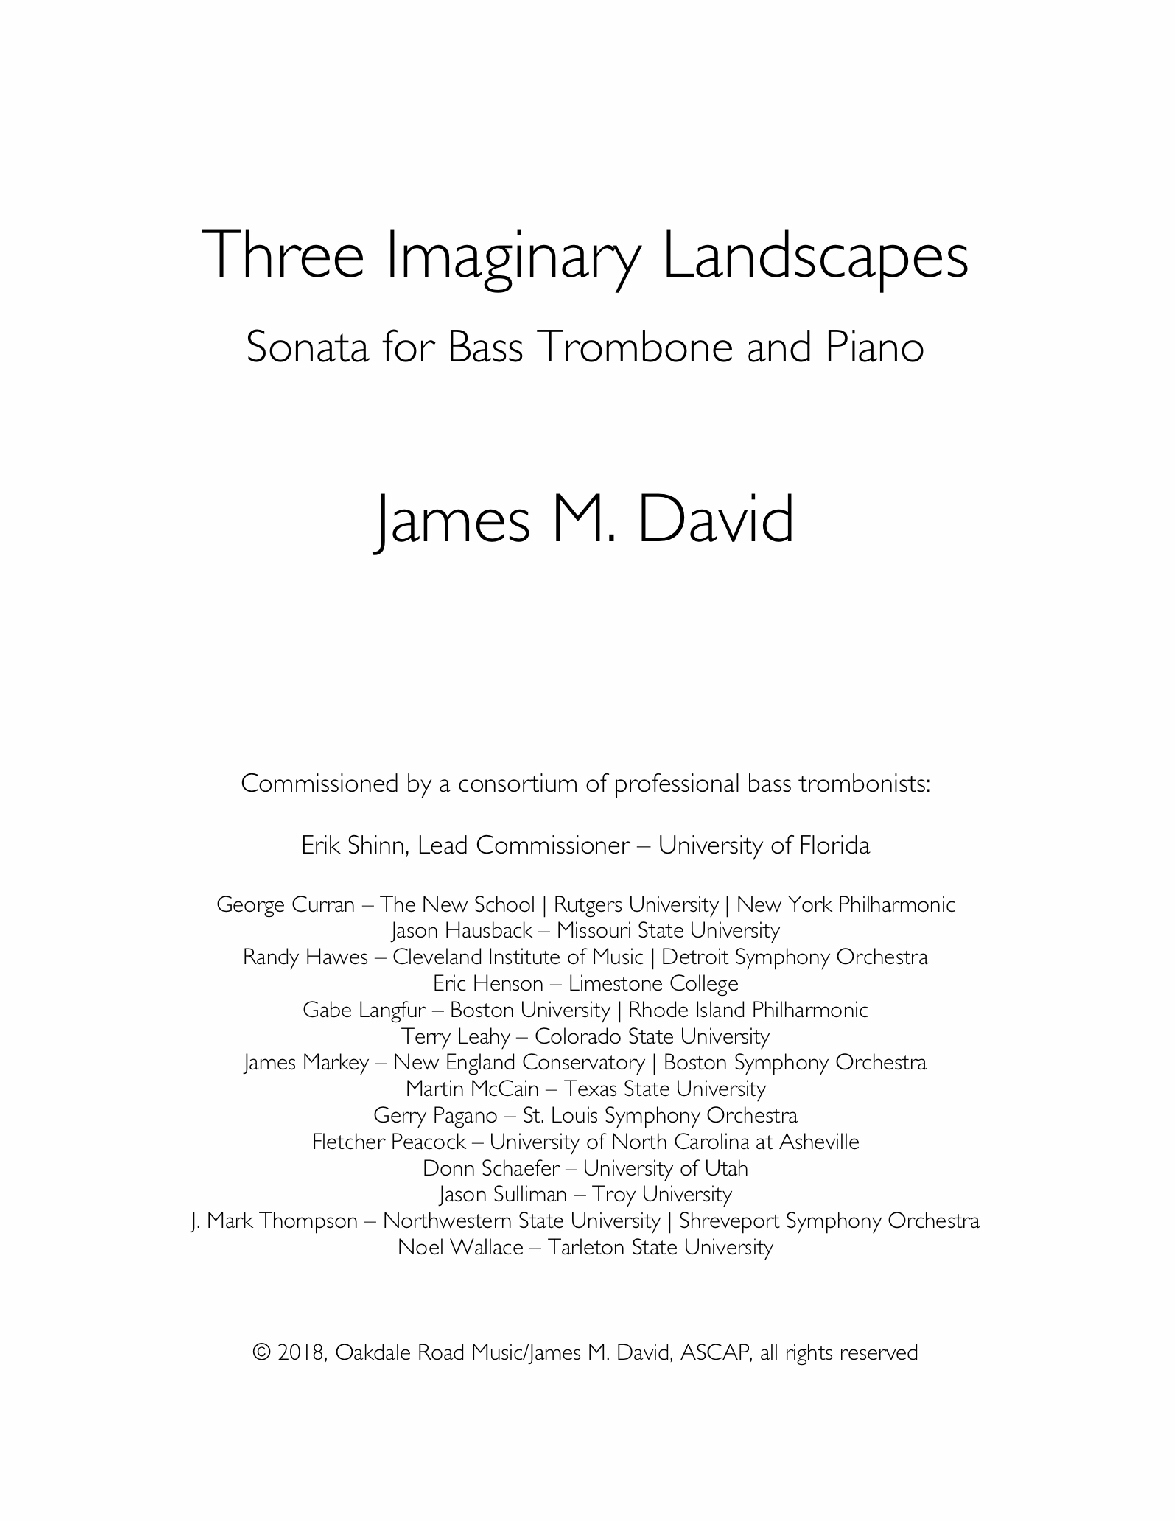 Three Imaginary Landscapes by James David